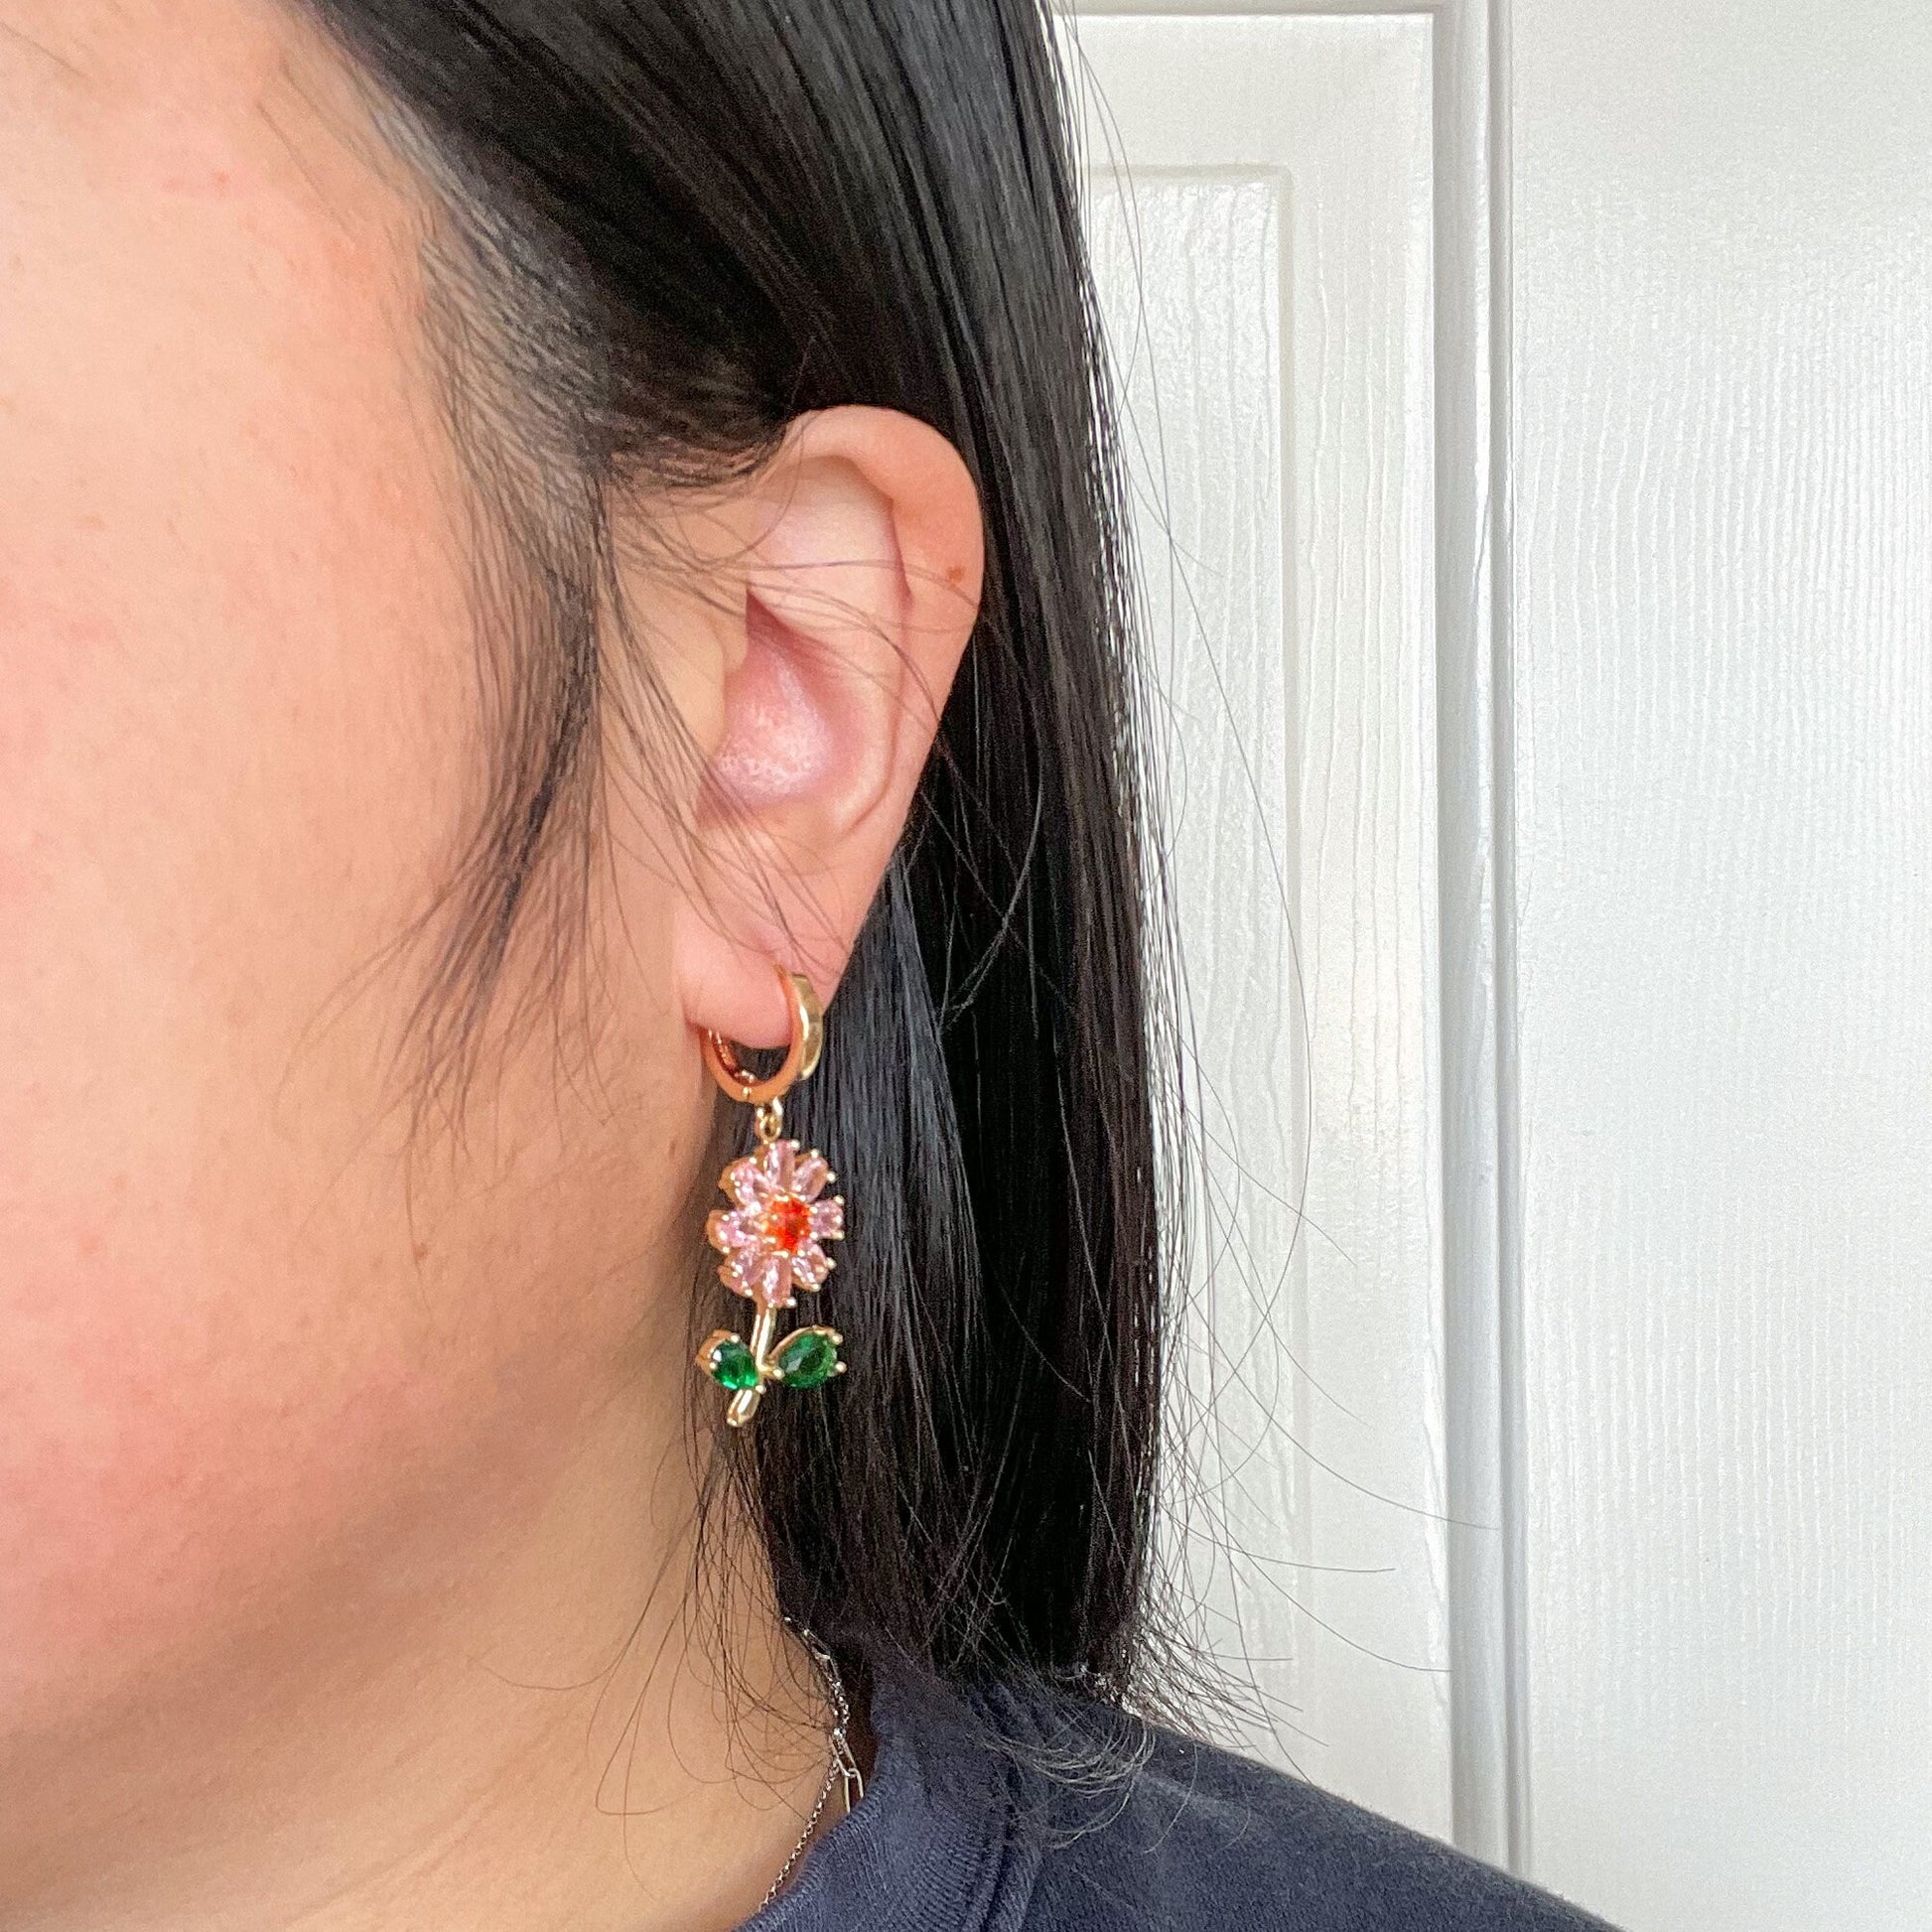 Pink Flower Charm Hoops//Flower Earring//Statement Earring//Gold Hoop Earring//Cute Spring Design//